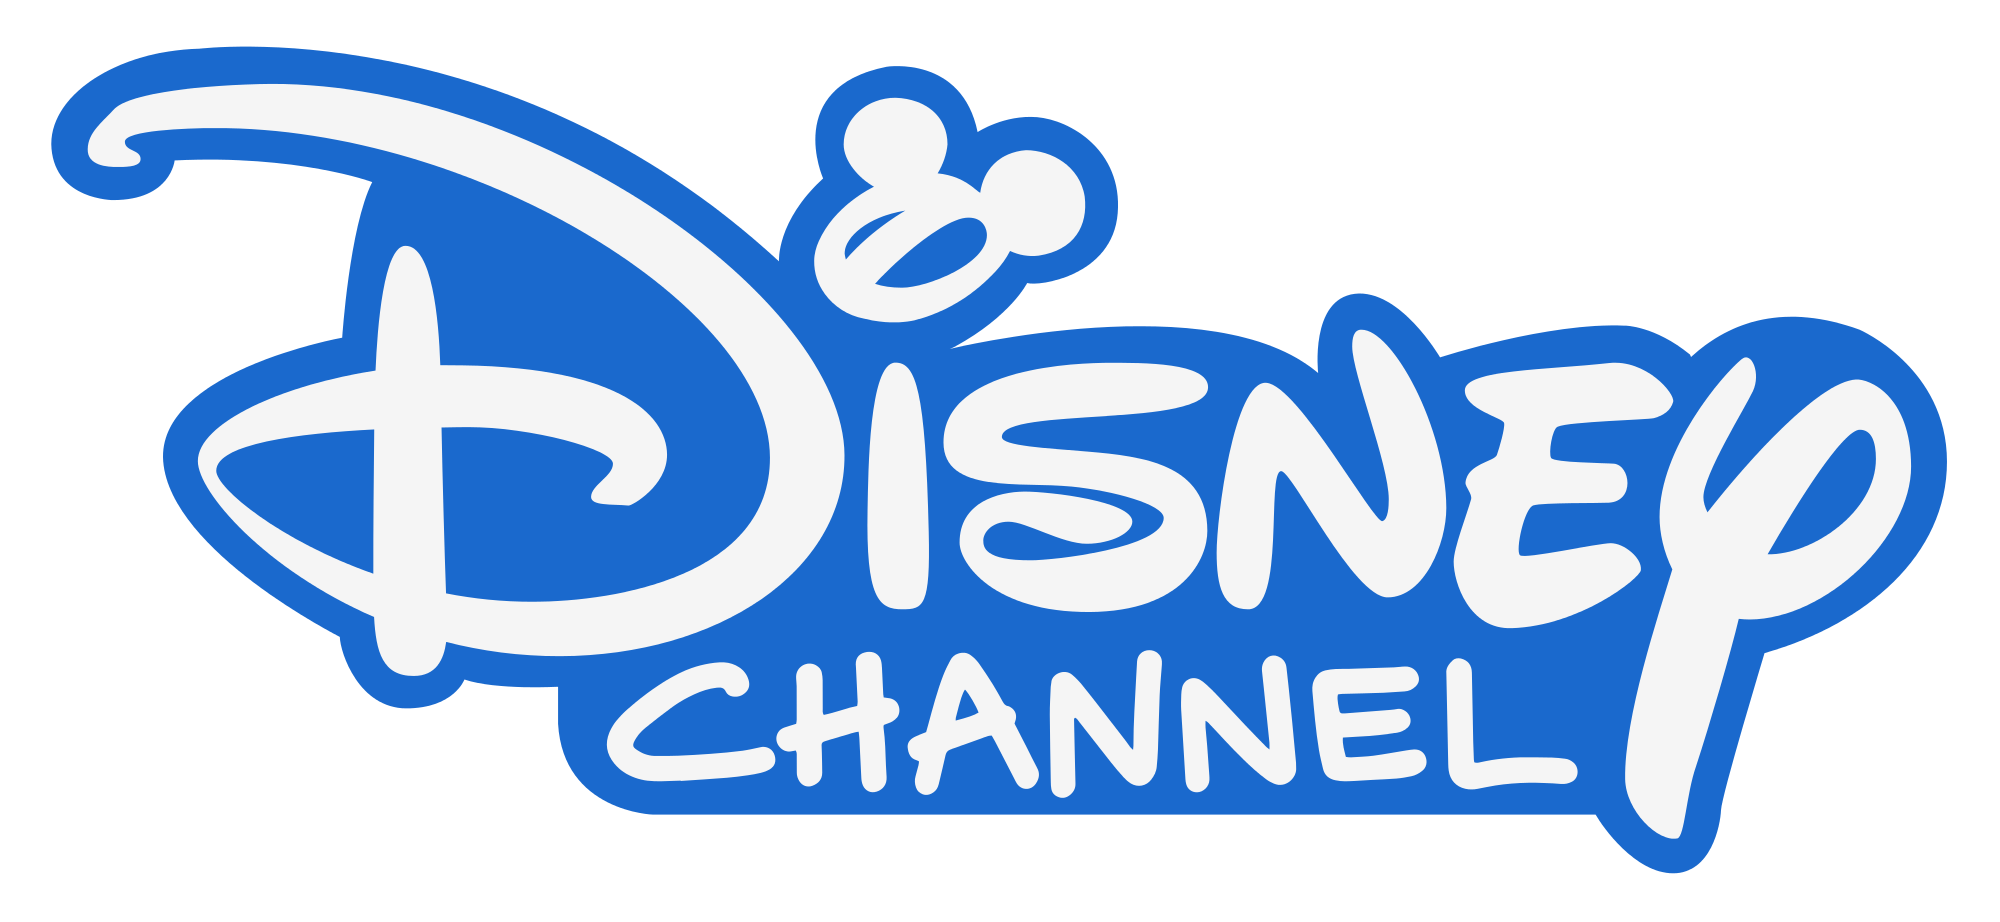 2015 Disney Channel Logo - Image - 2015 Disney Channel logo.svg.png | ICHC Channel Wikia ...